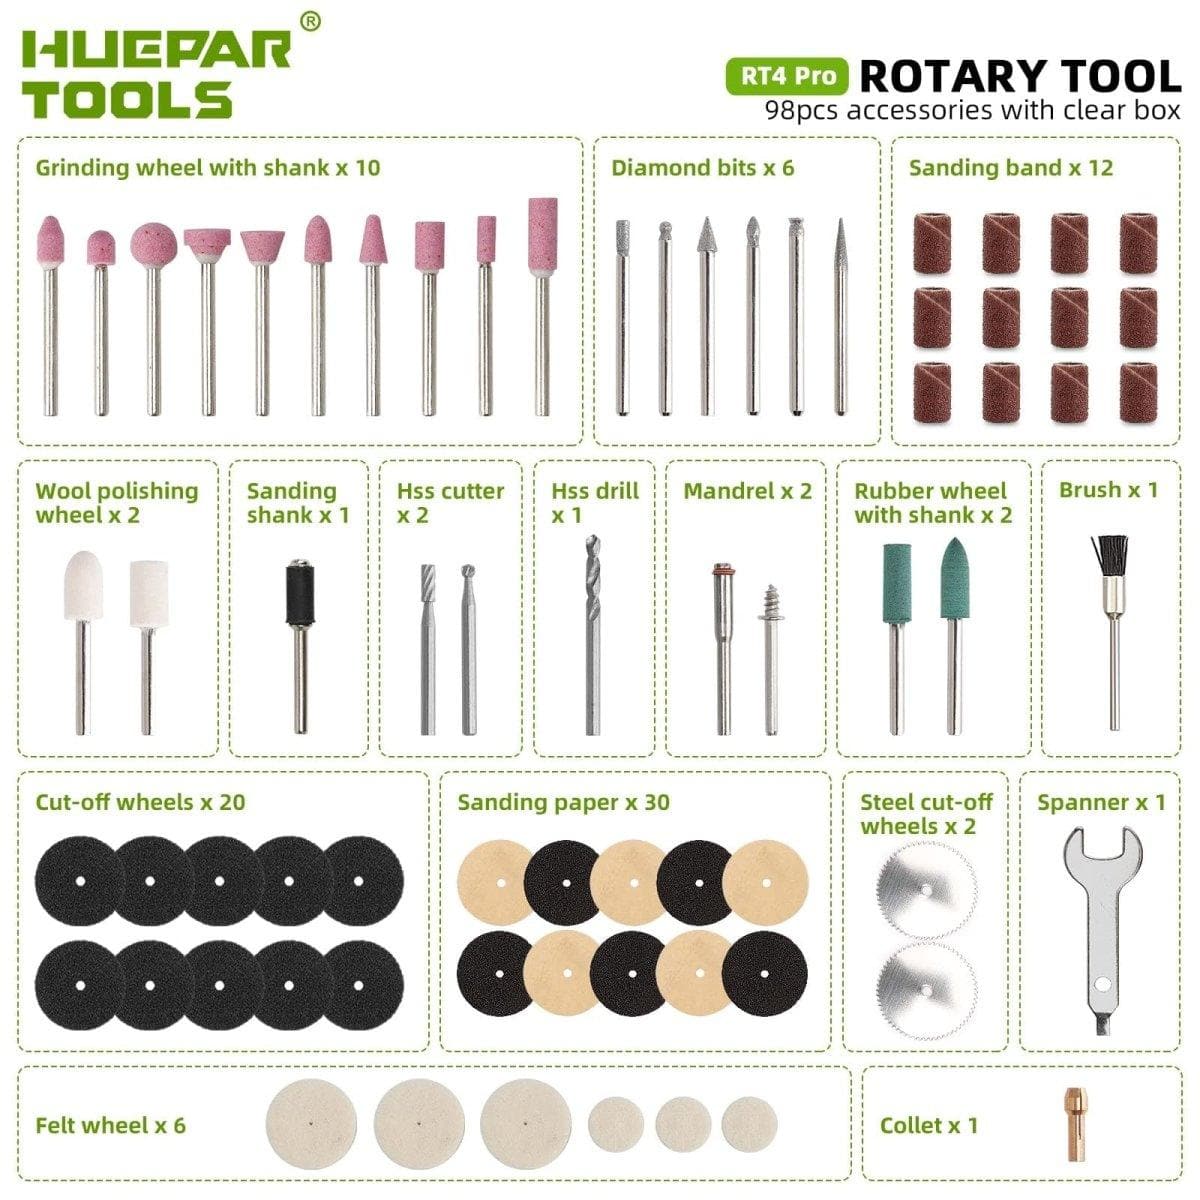 Huepar RT4 Basic - Mini Power Rotary Tool freeshipping - HUEPAR US